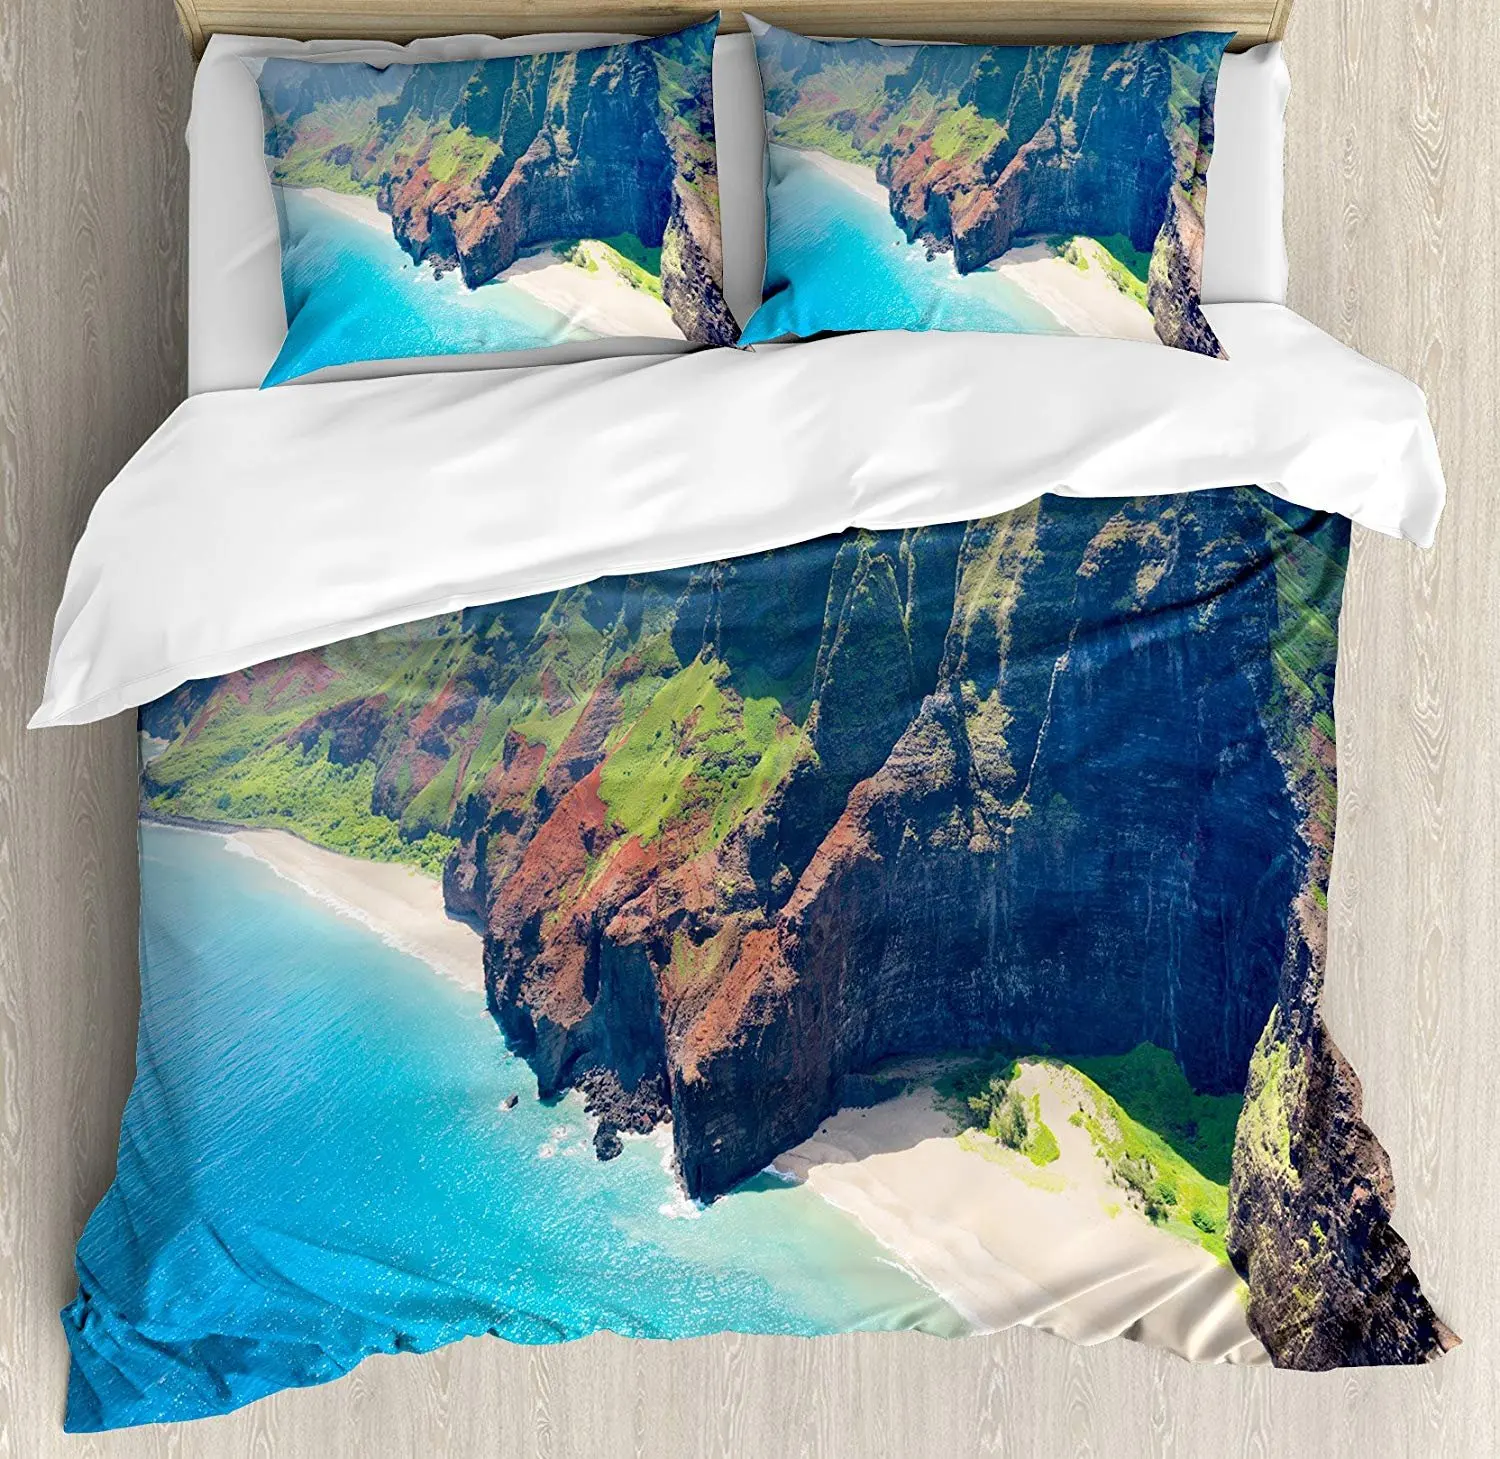 

Hawaiian Decor Bedding Set Na Pali Coast on Kauai Island on Hawaii in a Sunny Day Seaside Mountain Skyline Duvet Cover Bed Set